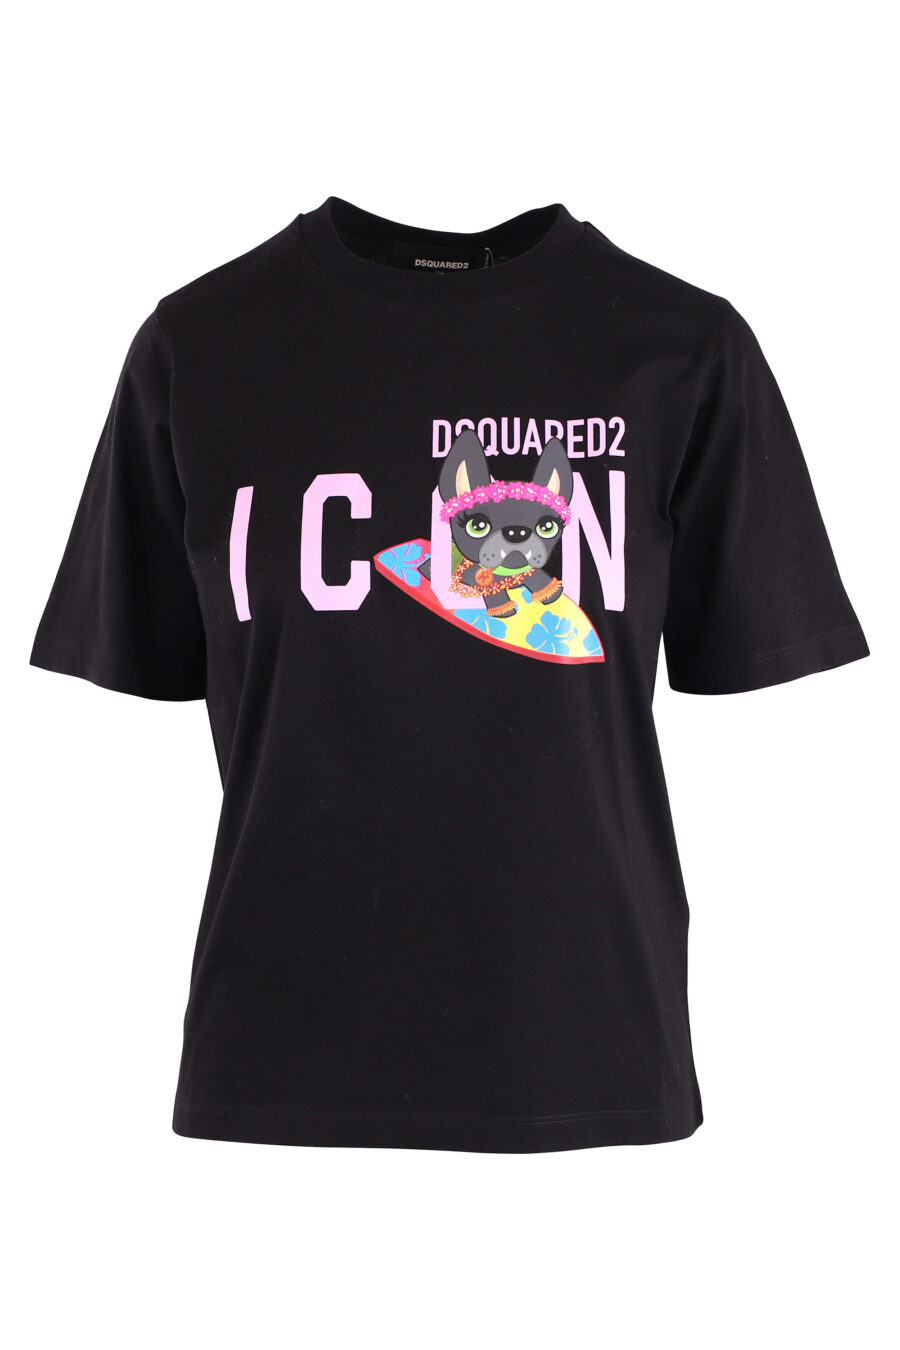 Camiseta negra con logo "icon" y perro surfer - IMG 9128